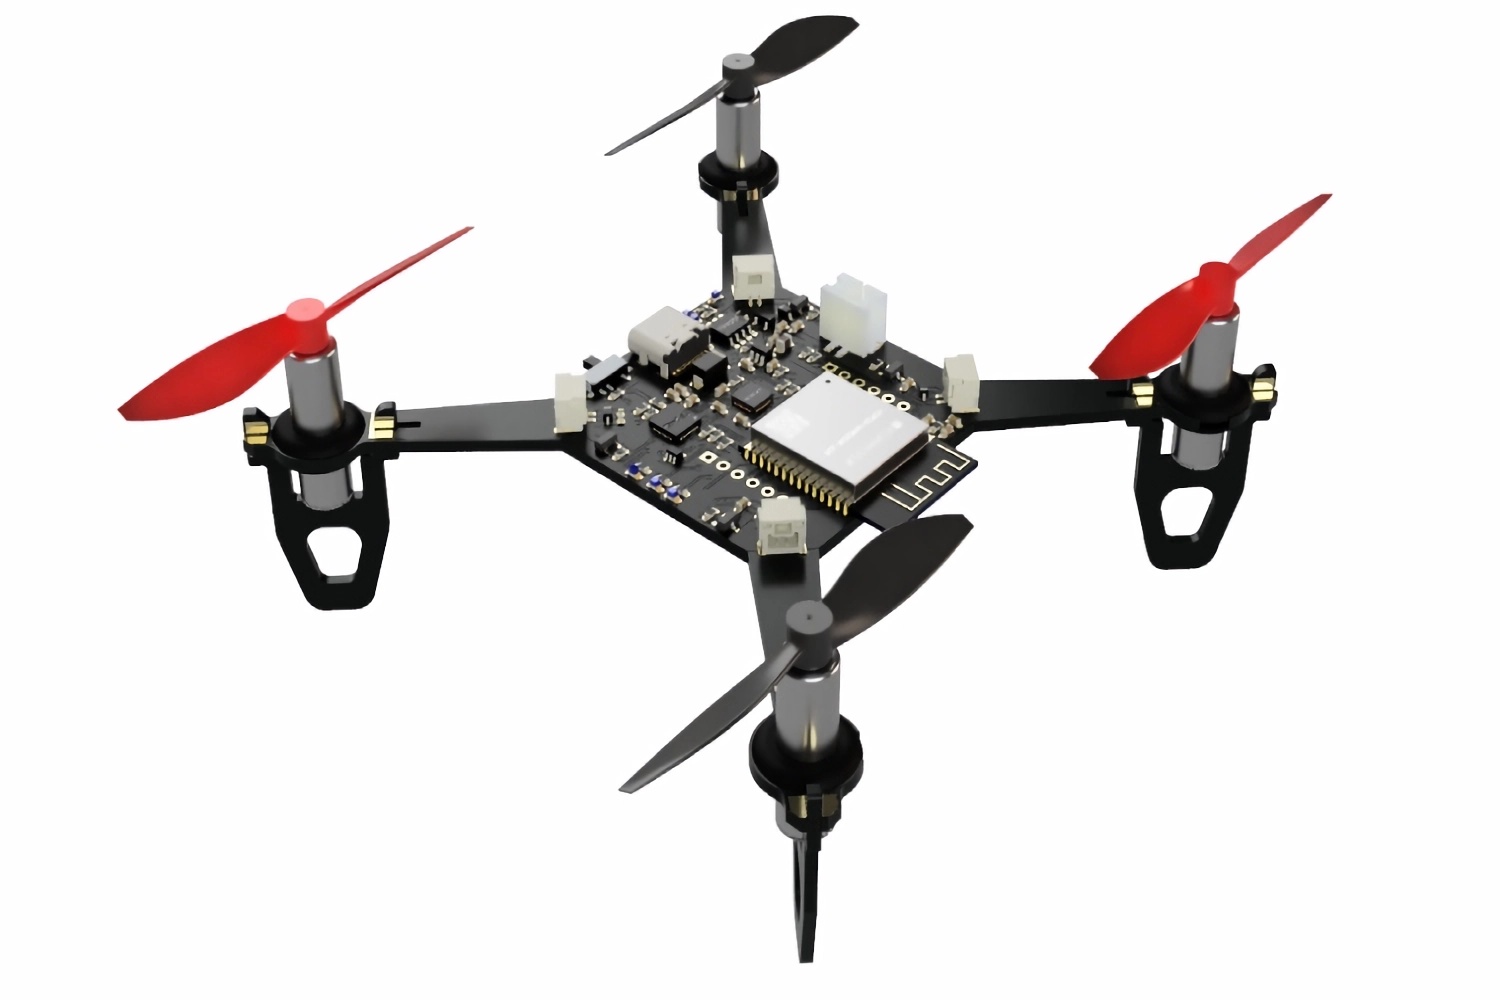 SkyByte Mini Wi-Fi-controlled drone